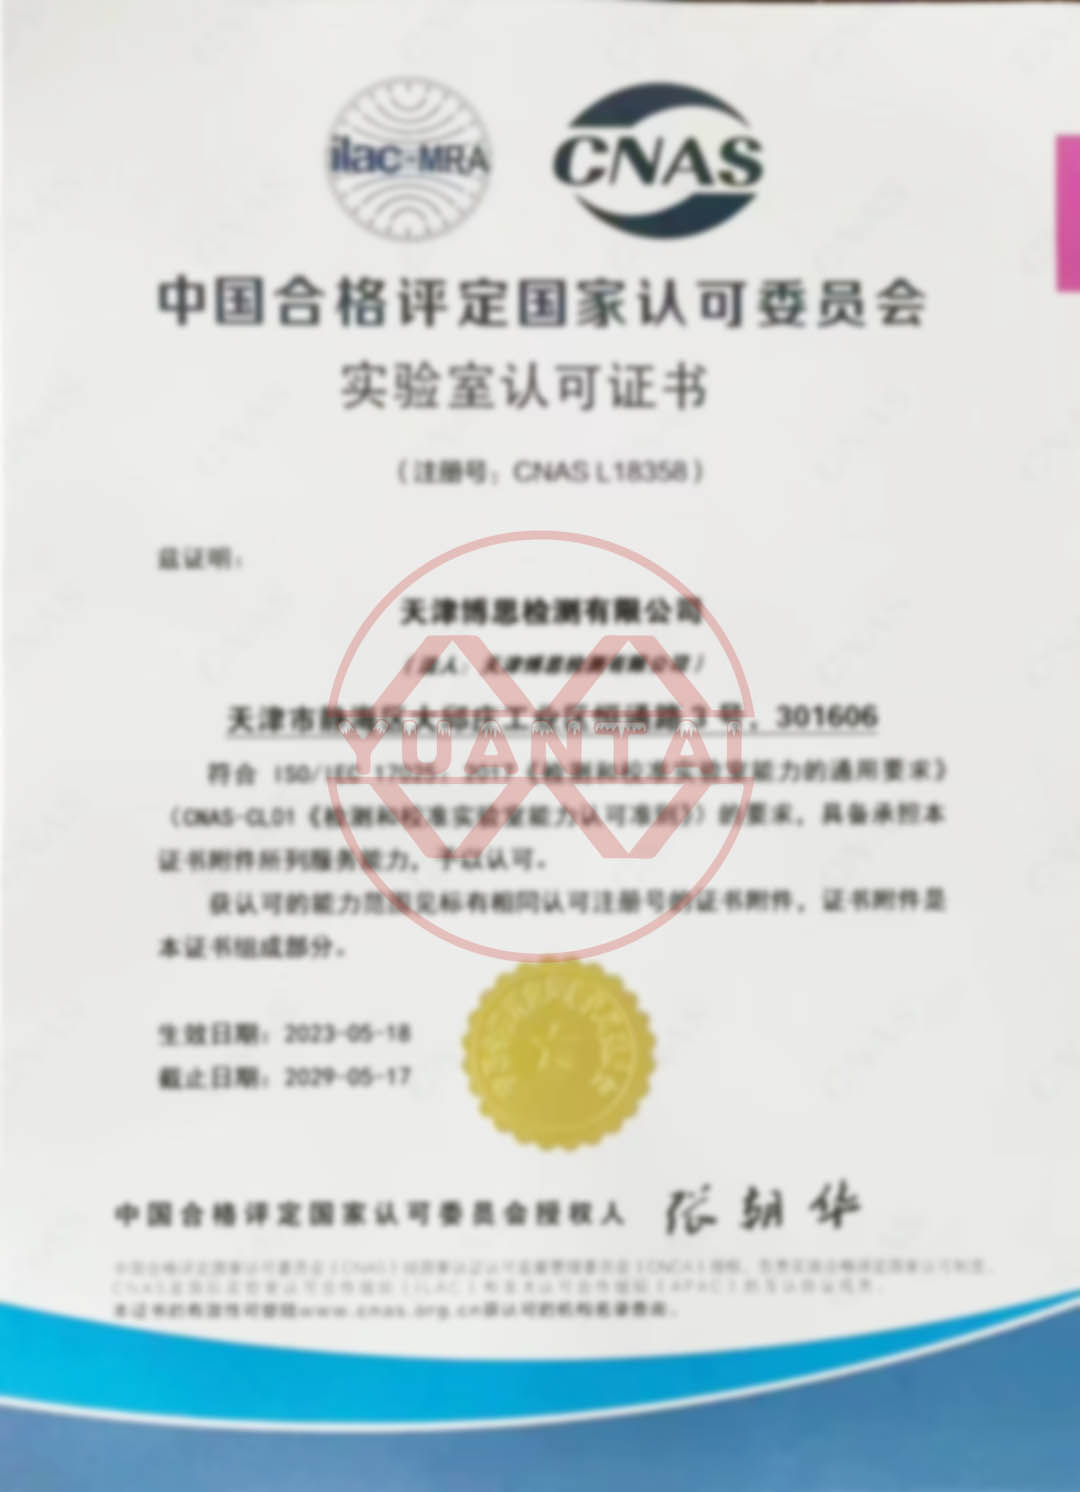 Tianjin Bosi Testing Co., Ltd. کي مبارڪون، Yuantai Derun Steel Pipe Group جي ماتحت ڪمپني، CNAS سرٽيفڪيشن پاس ڪرڻ تي.